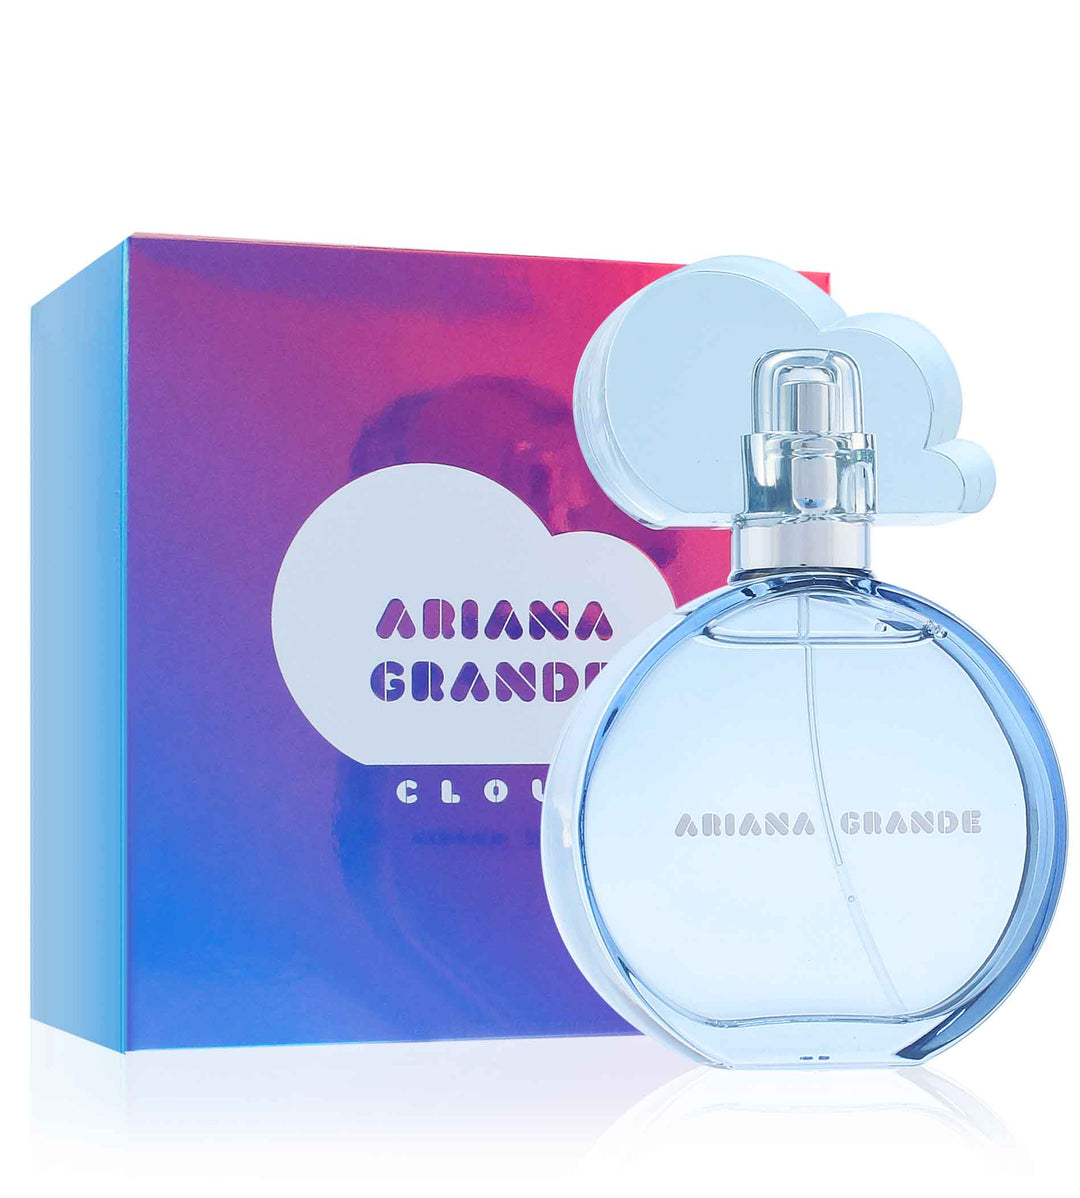 ARIANA GRANDE  Cloud eau de parfum for women 30 ml